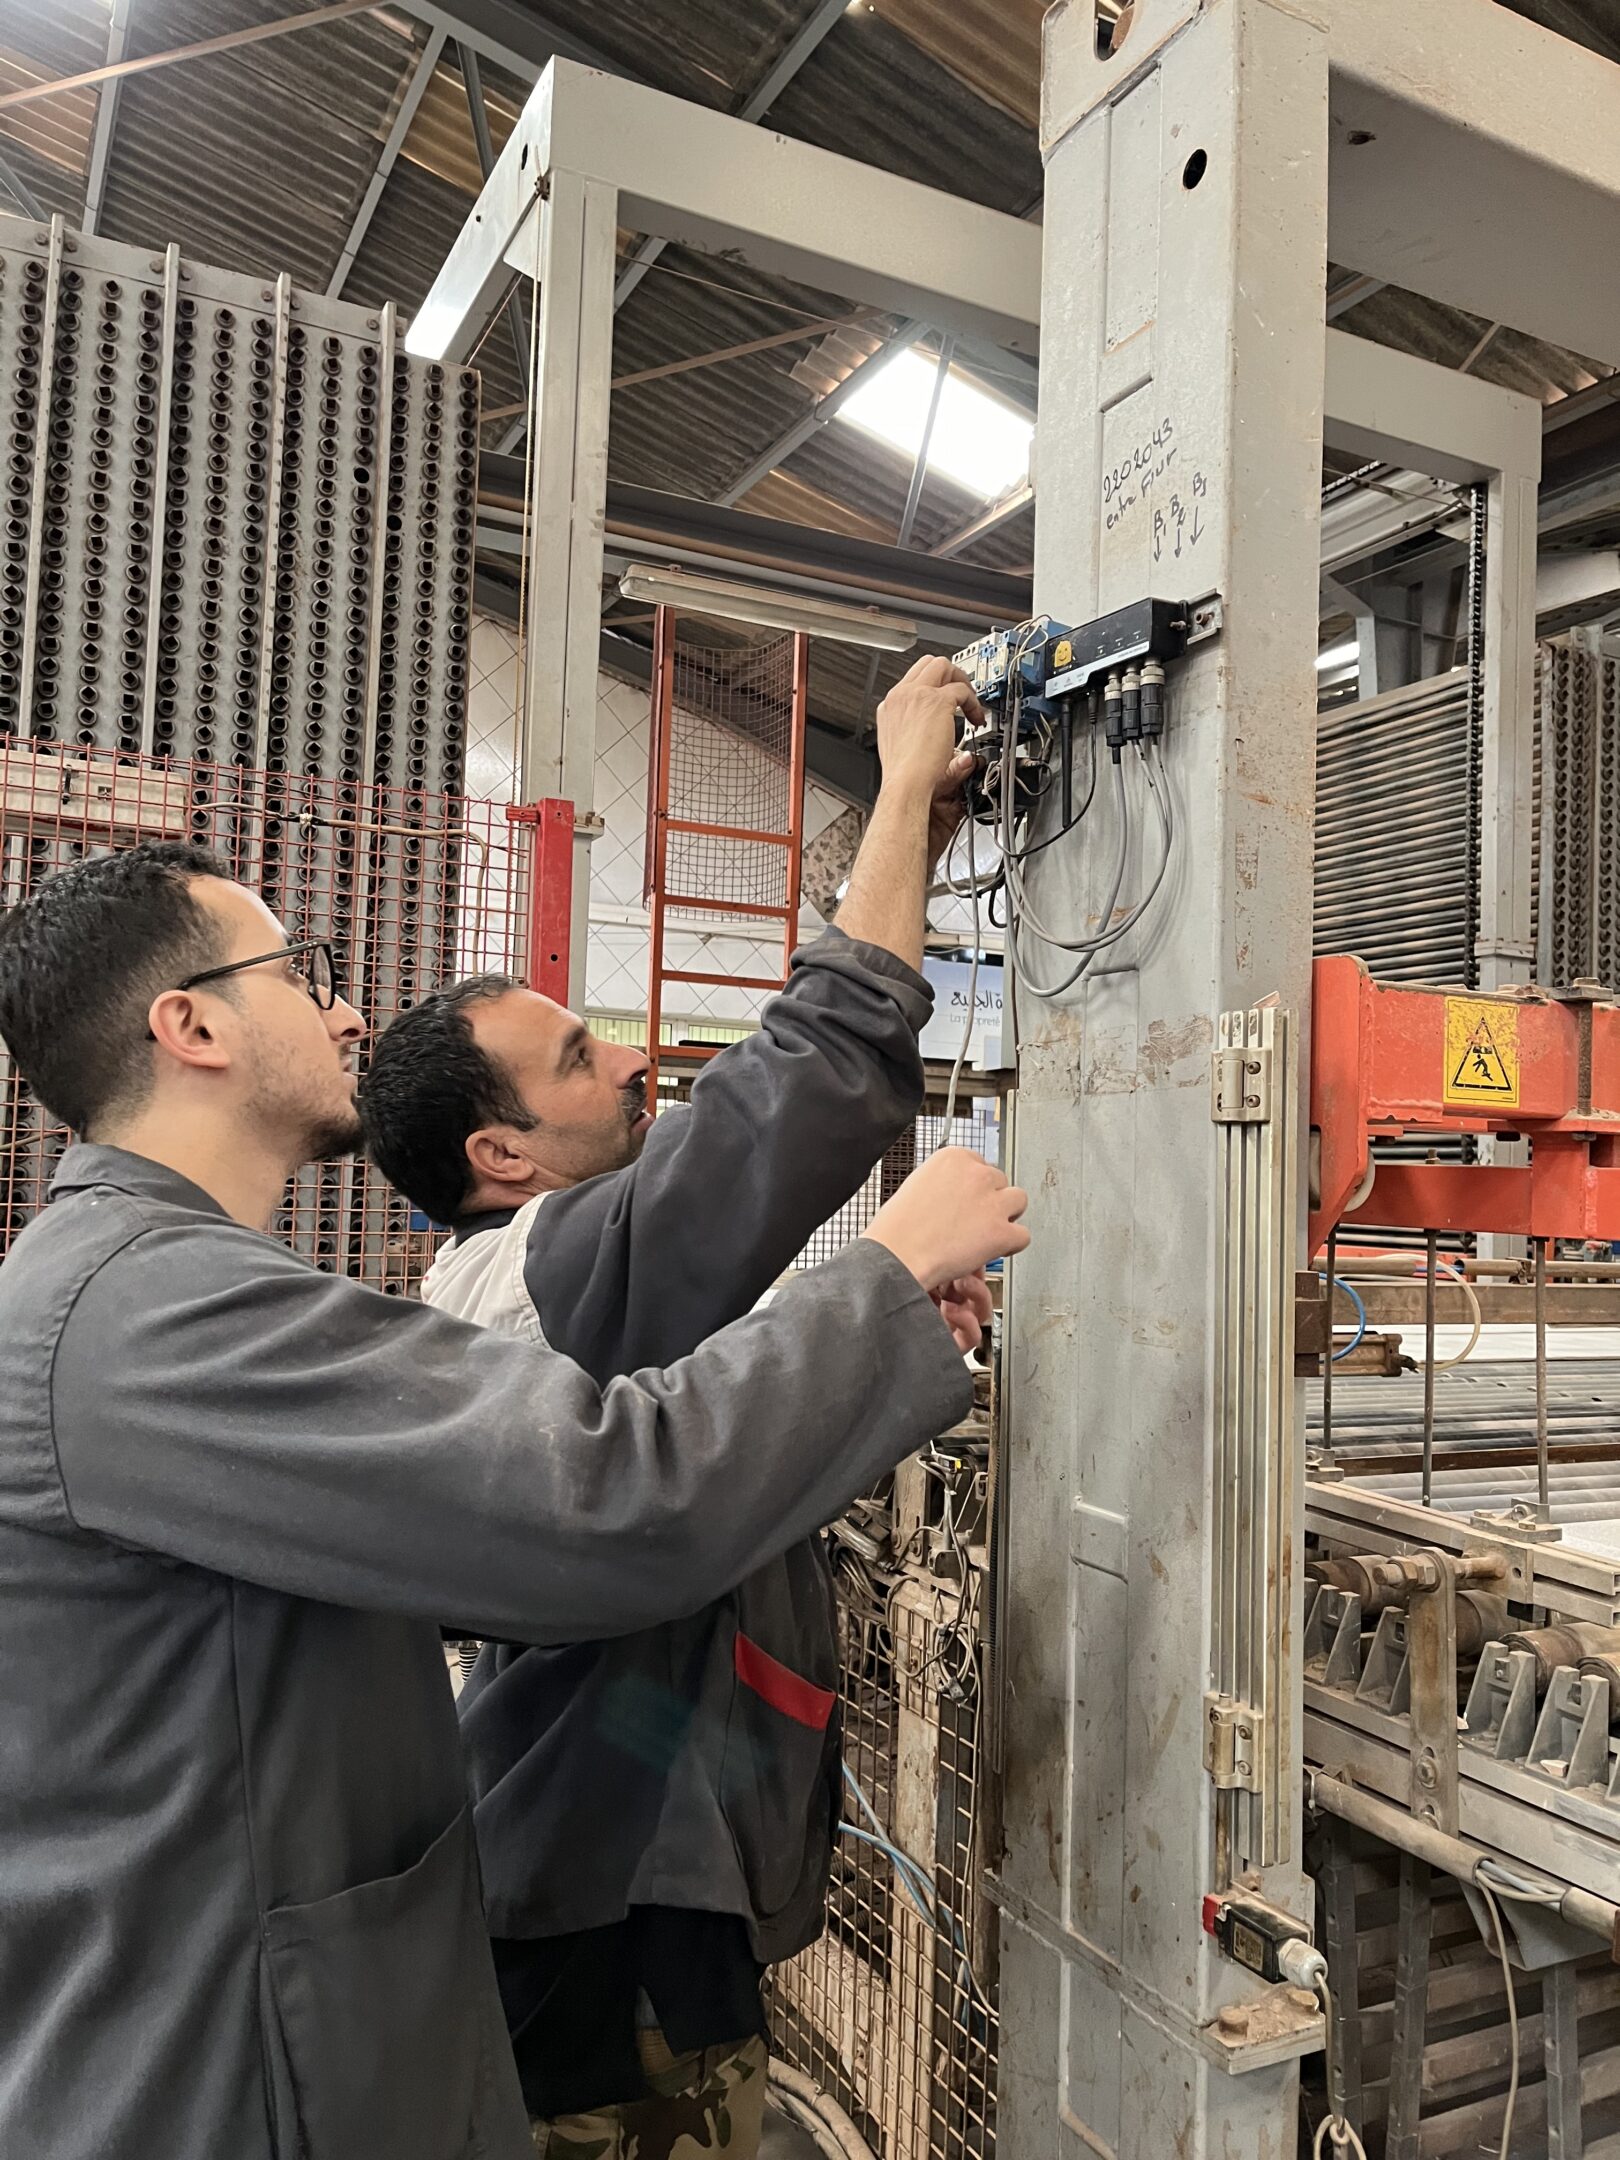 Evocon being installed in a Super Cerame factory